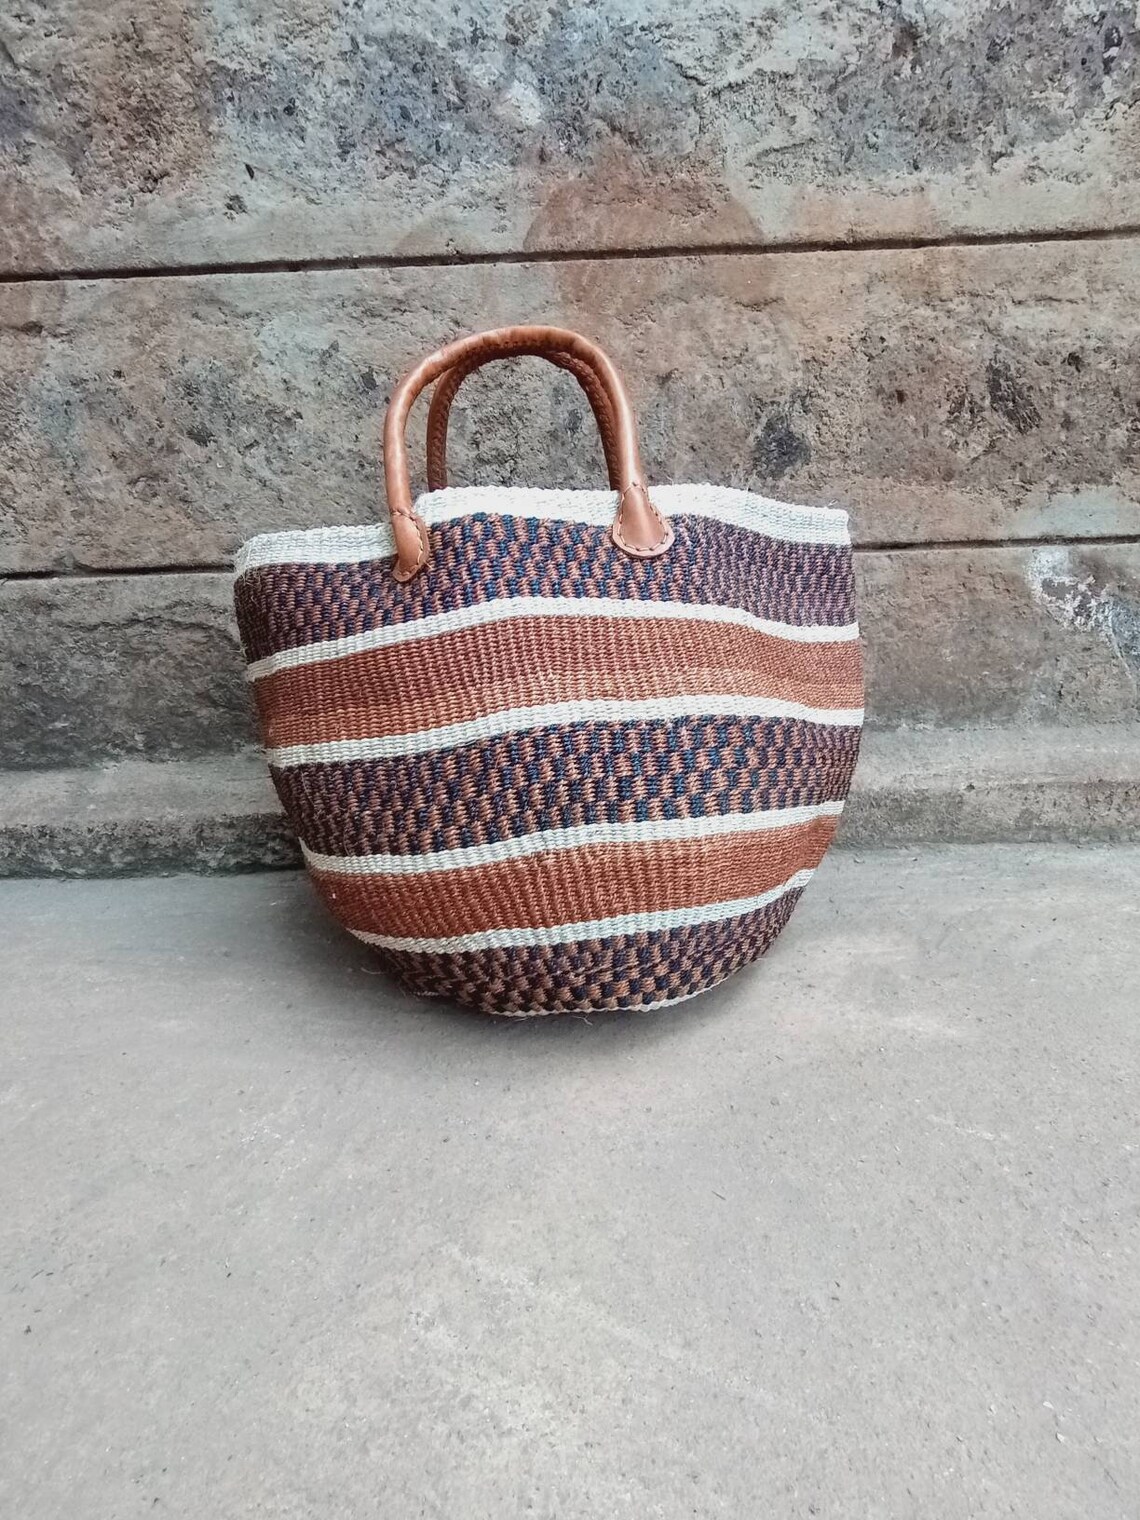 Woven bags for women kenyan woven bag market bag sisal | Etsy